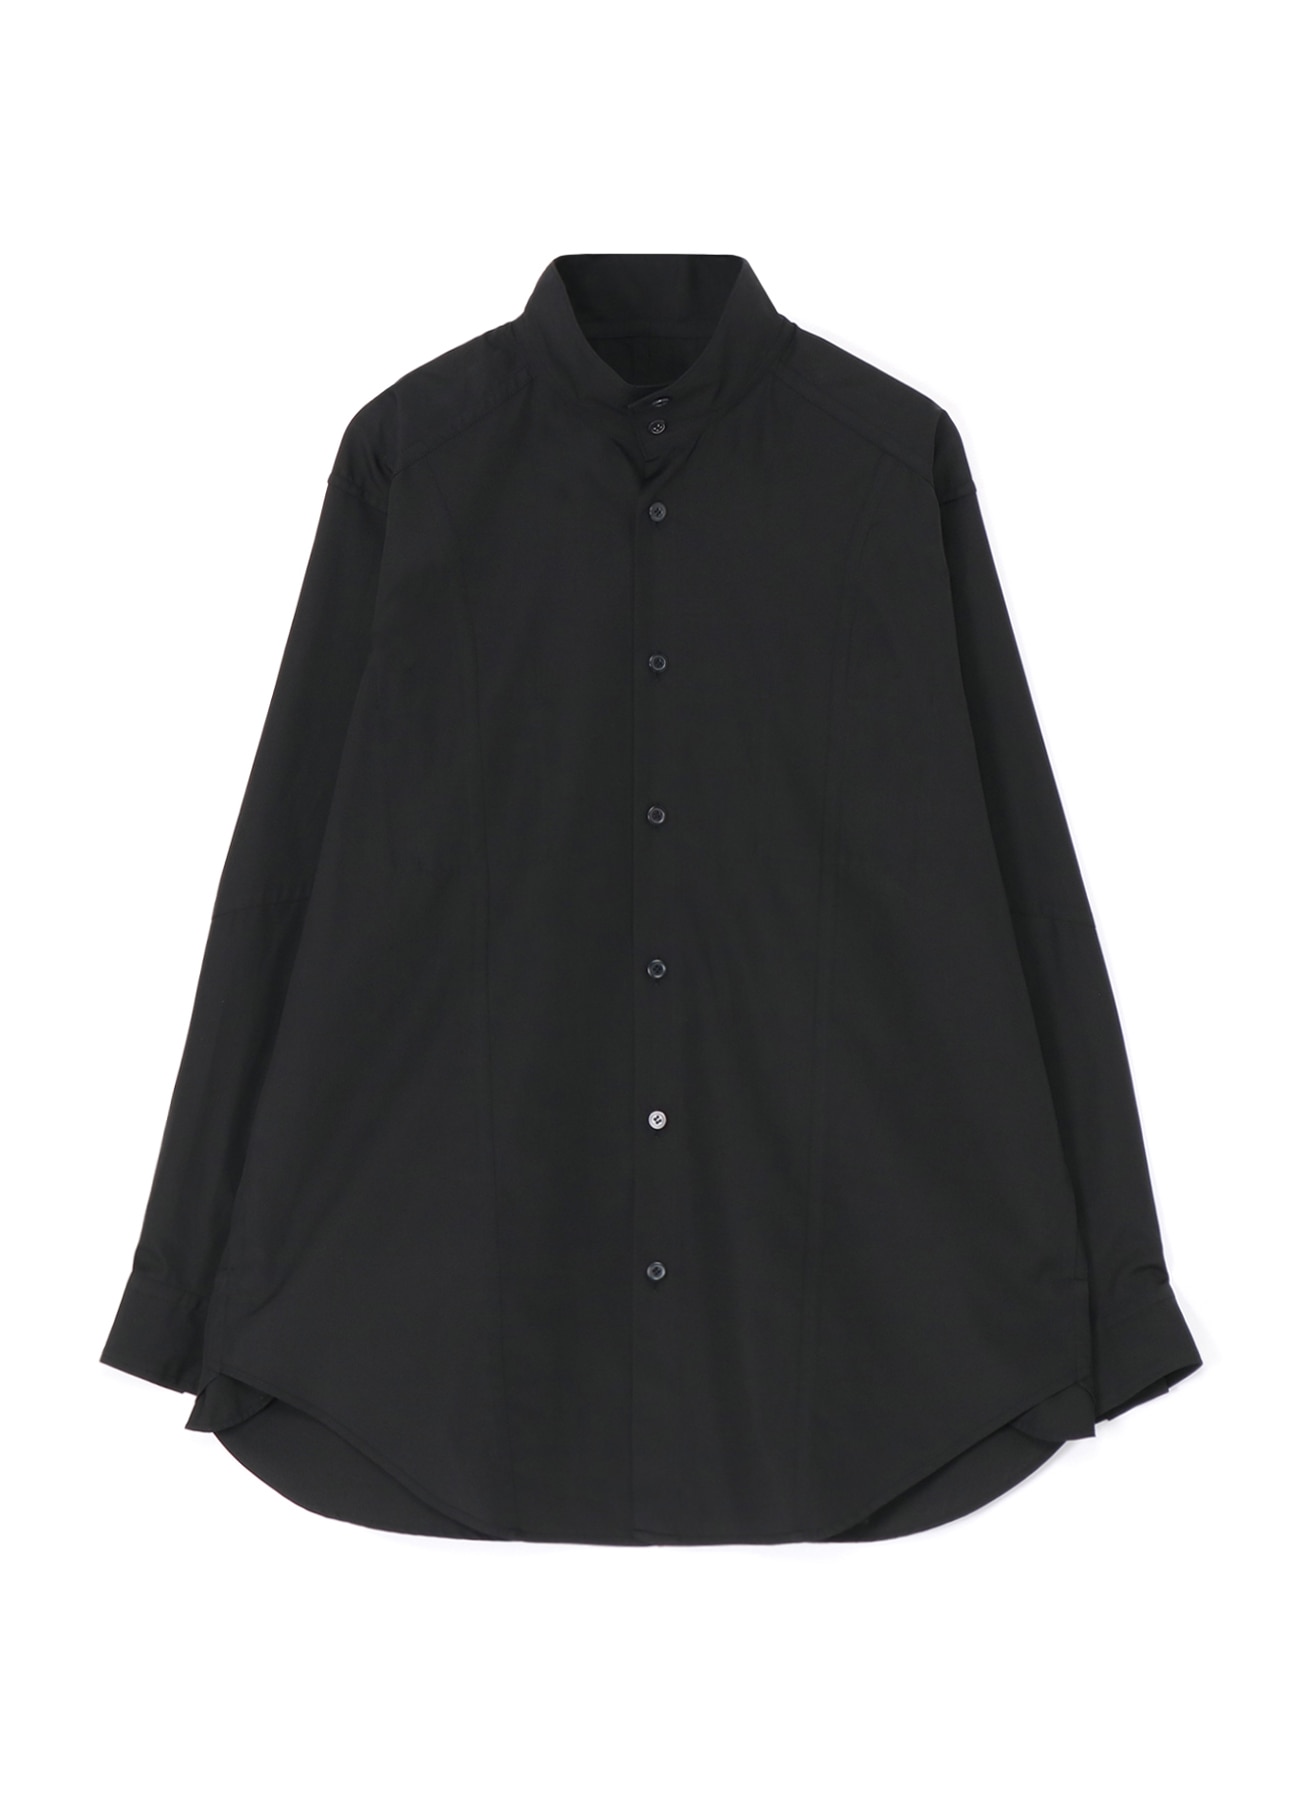 WILDSIDE × Kié Einzelgänger Cotton Broadcloth Shirt